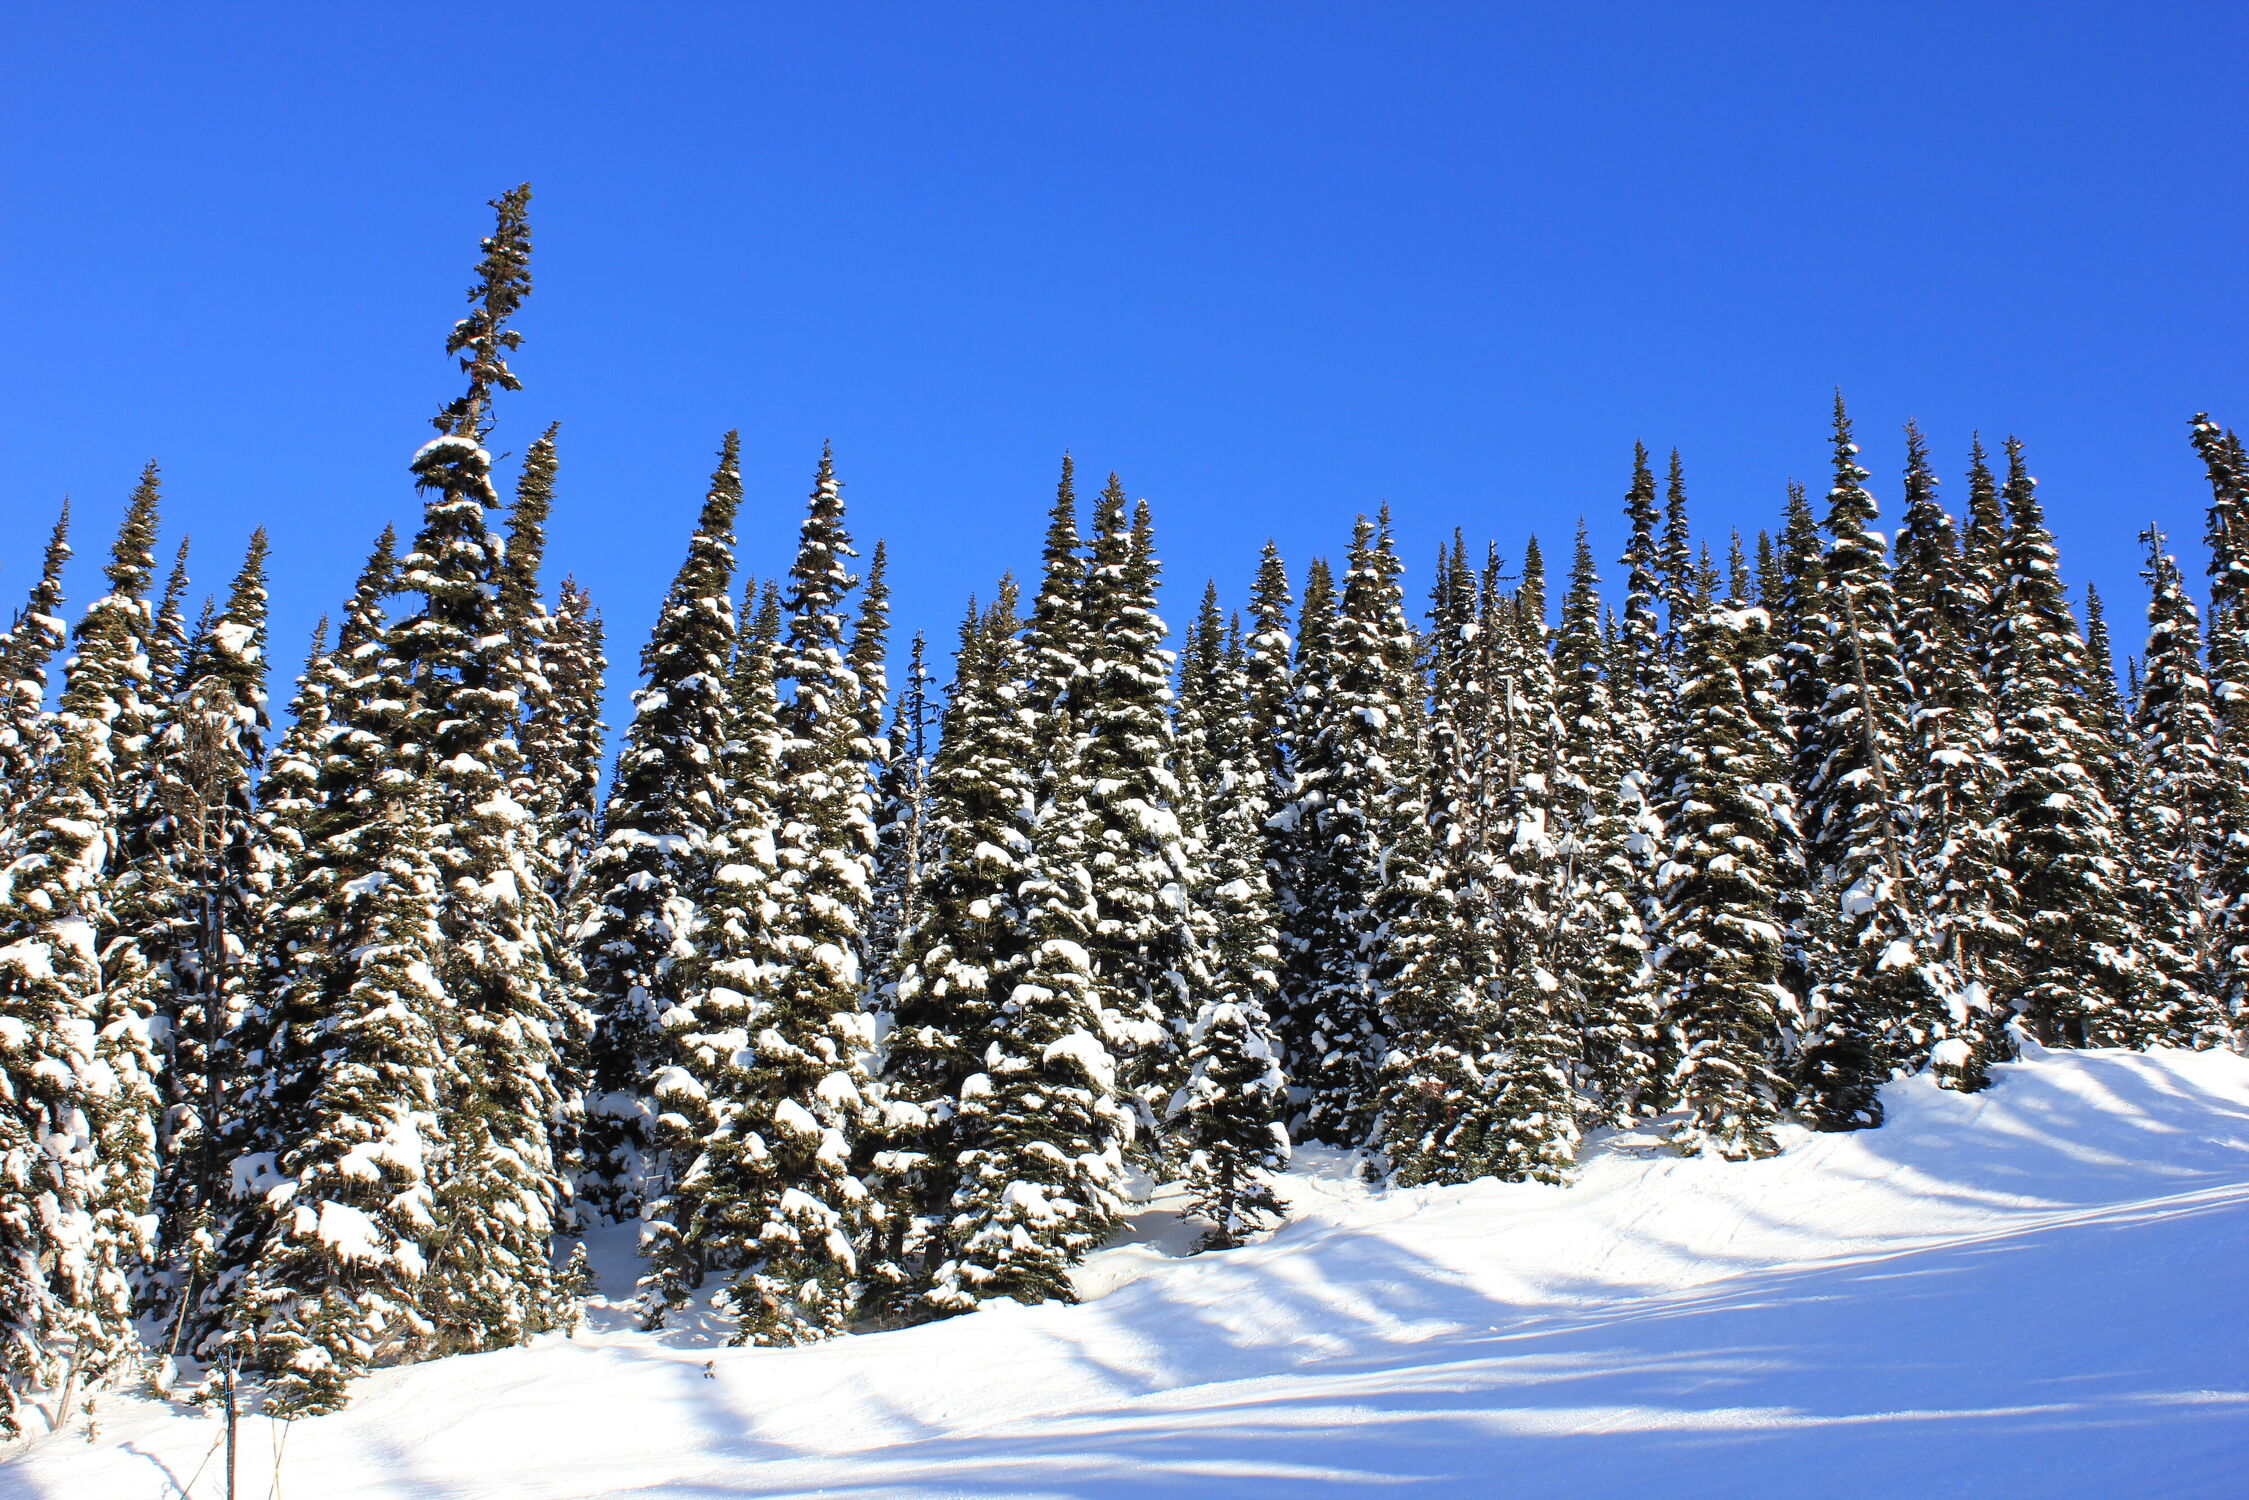 Bild mit Winter, Forest, Nature, Tree, Christmas, sun, snow, background, sunny day, fir